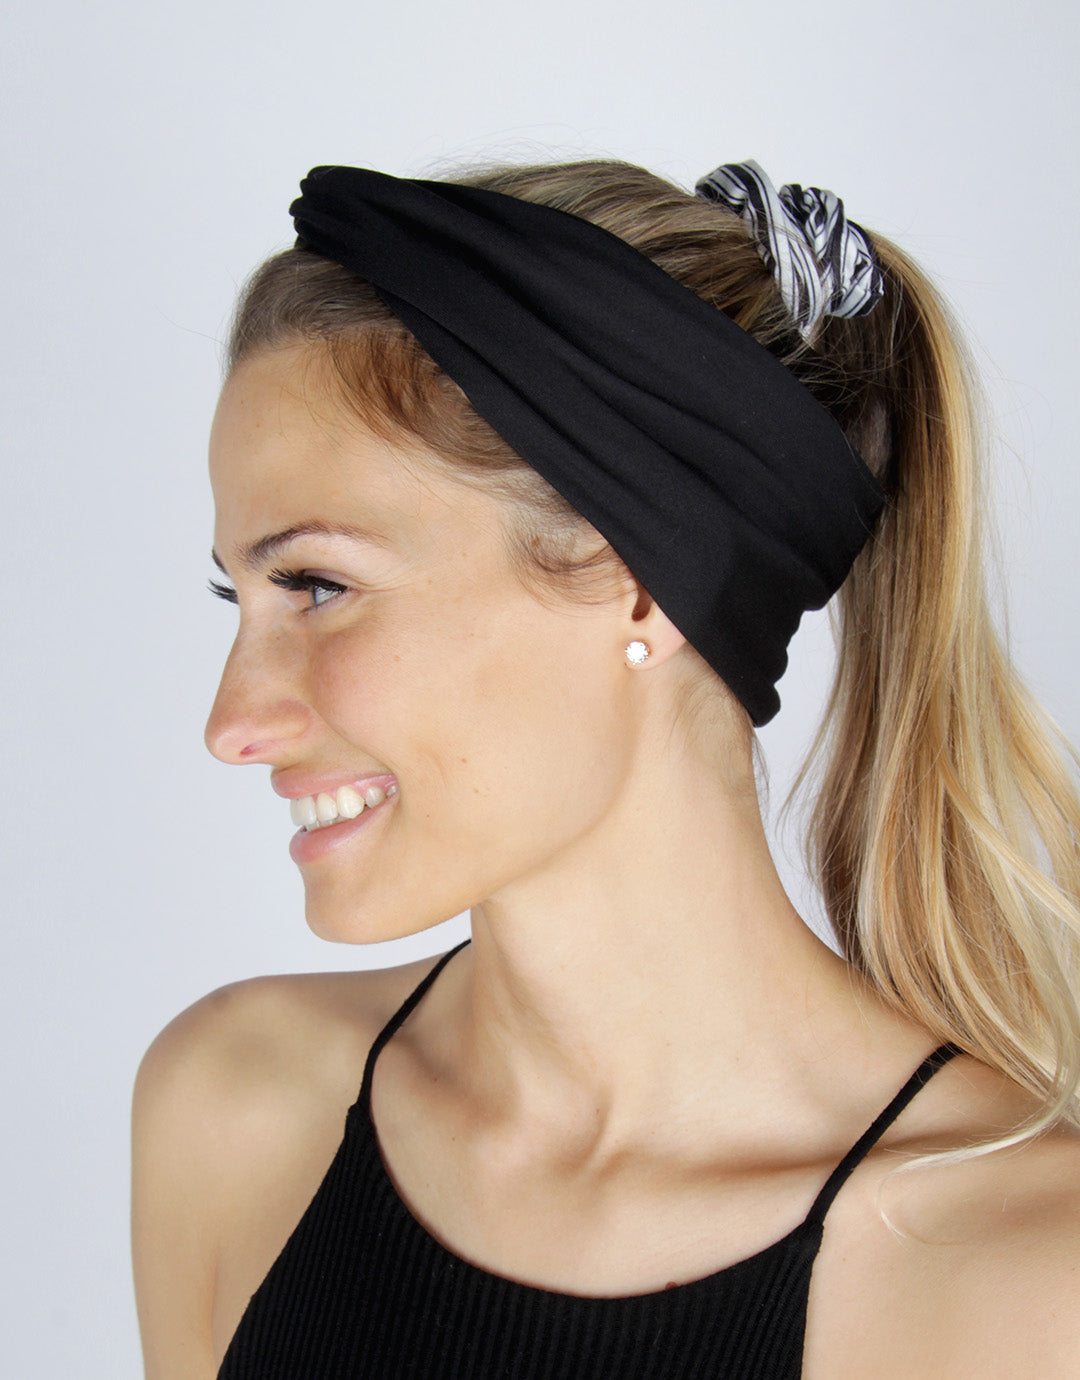 BANDED Women’s Headwraps + Hair Accessories - Ebony - Classic Twist Headwrap